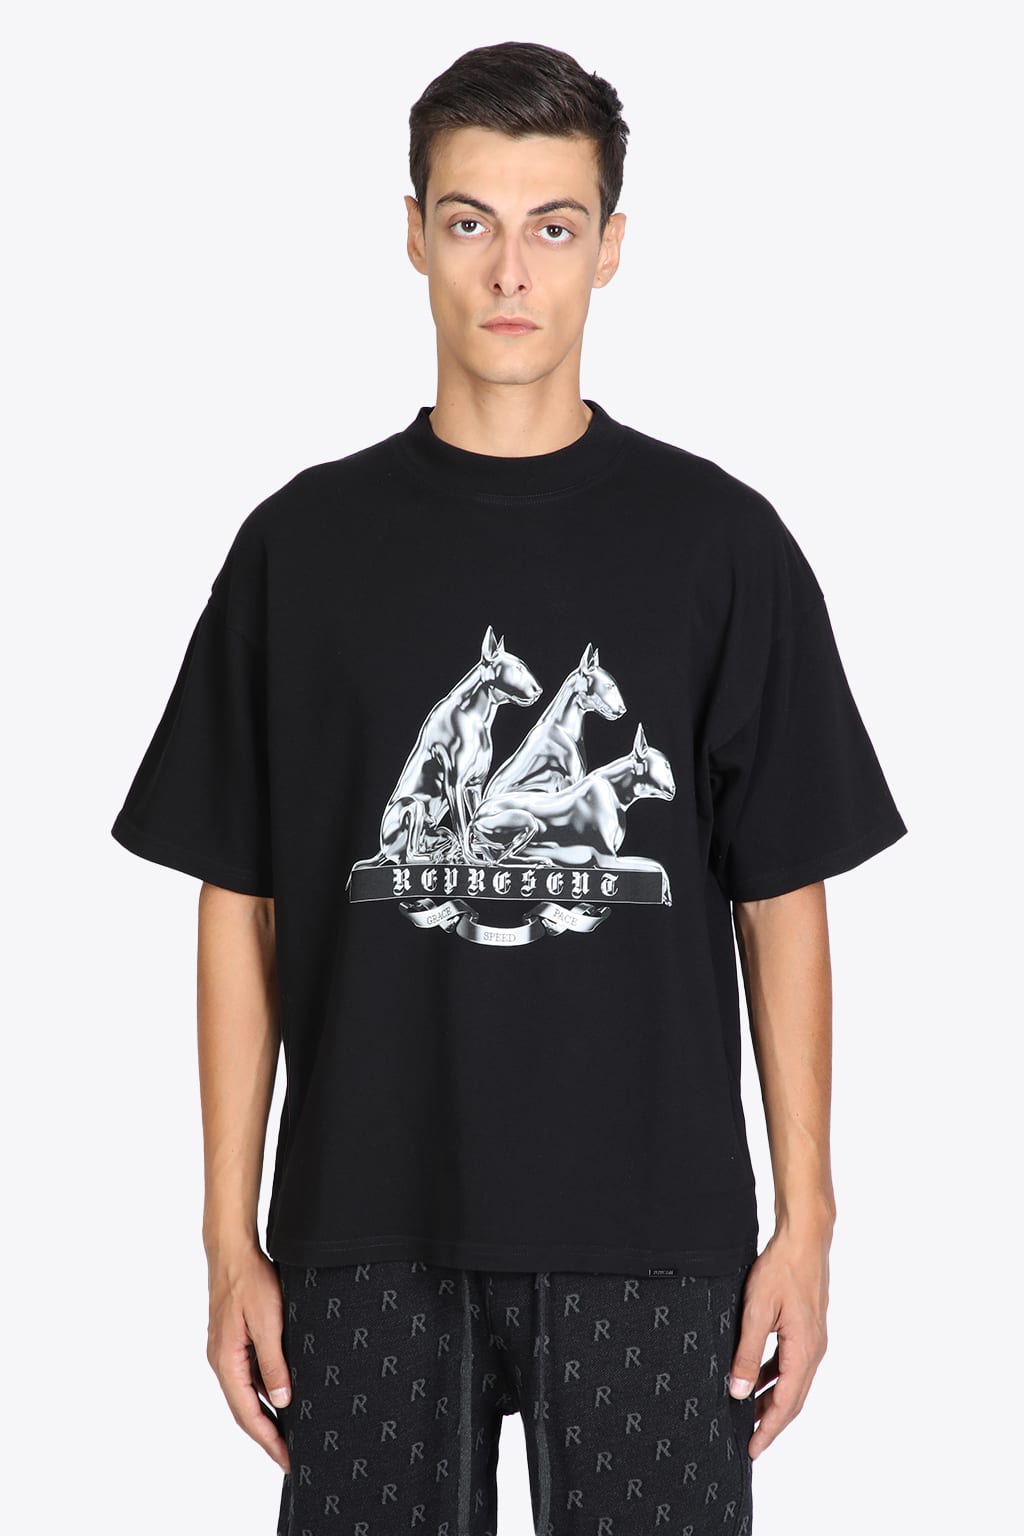 REPRESENT Bullterrier T-shirt Black cotton t-shirt with bullterrier print - Bullterrier t-shirt